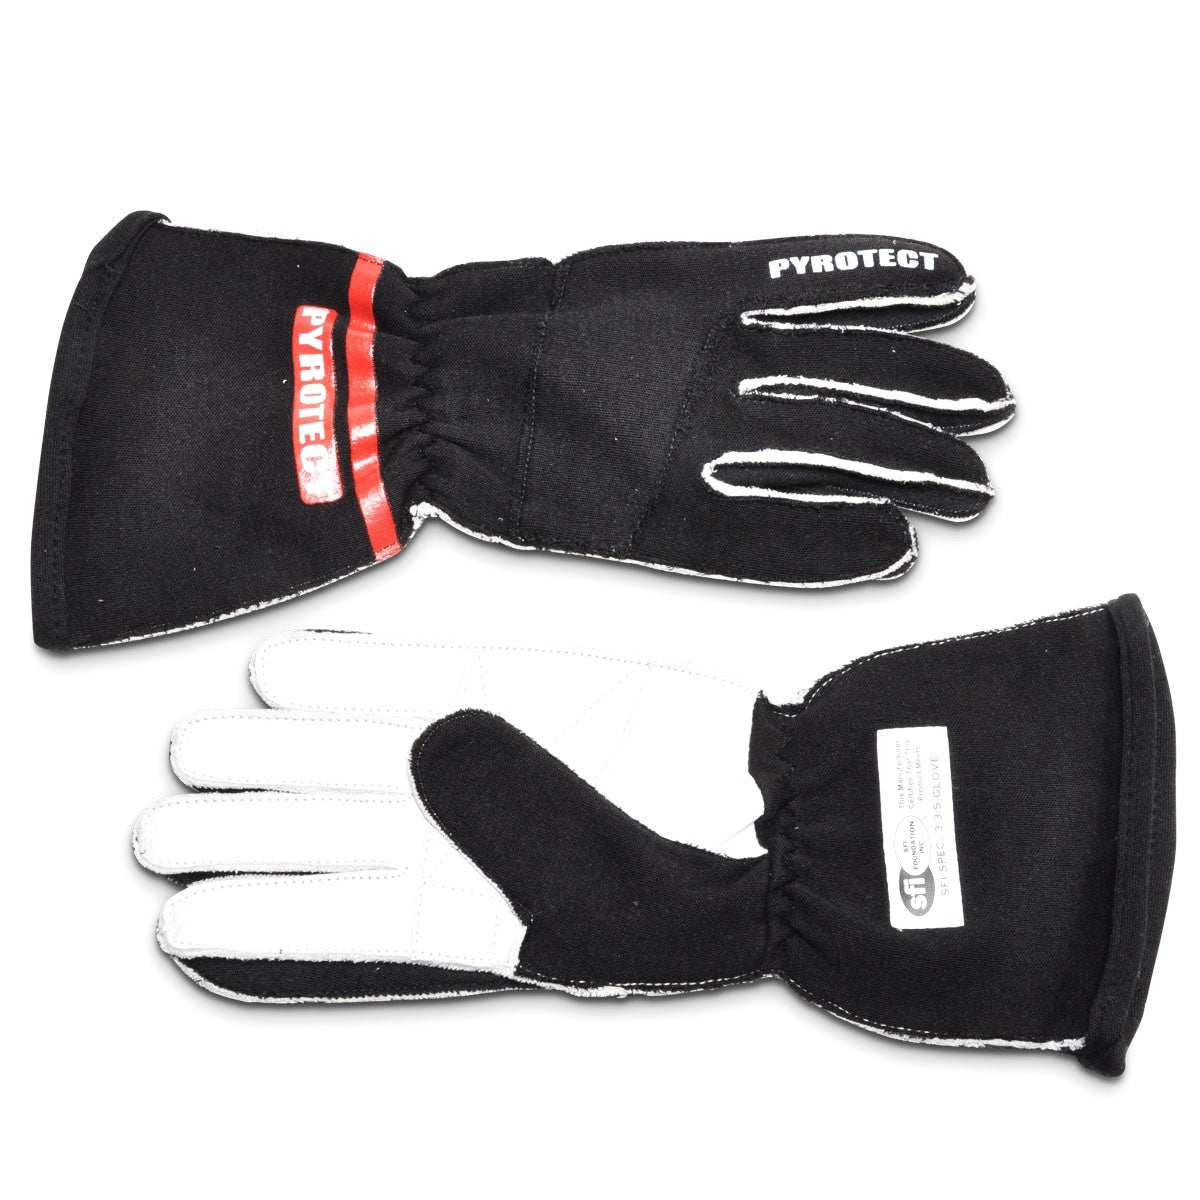 Pyrotect Glove PRO 2 Layer Black Medium SFI-5 Safety Clothing Driving Gloves main image